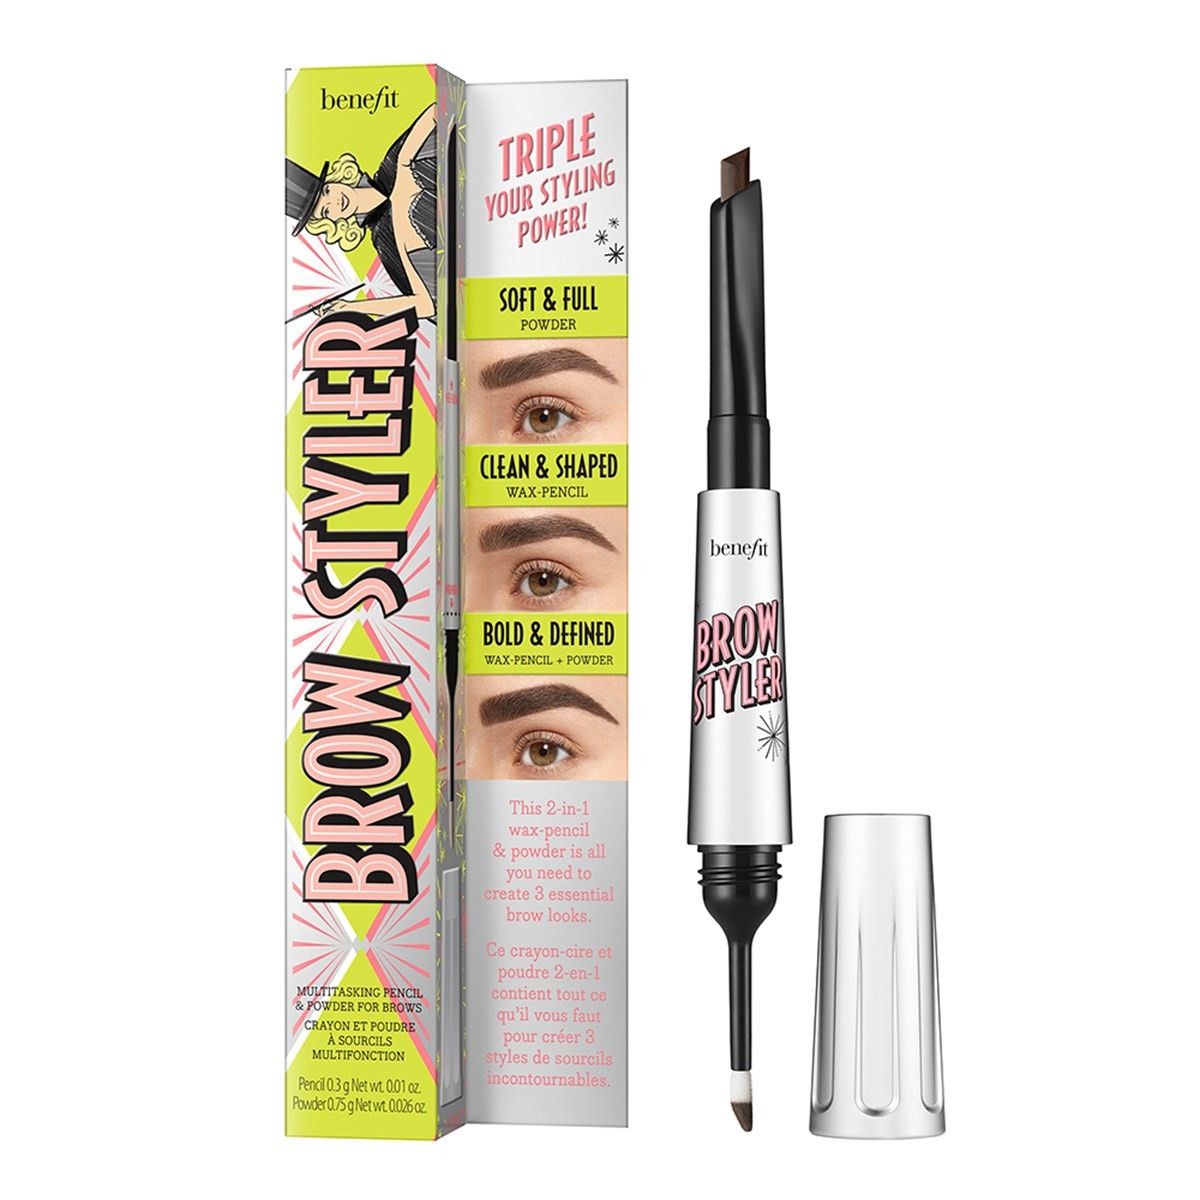 Augenbrauen-Stift & Puder - Brow Styler - Multitasking Pencil & Powder For Brows